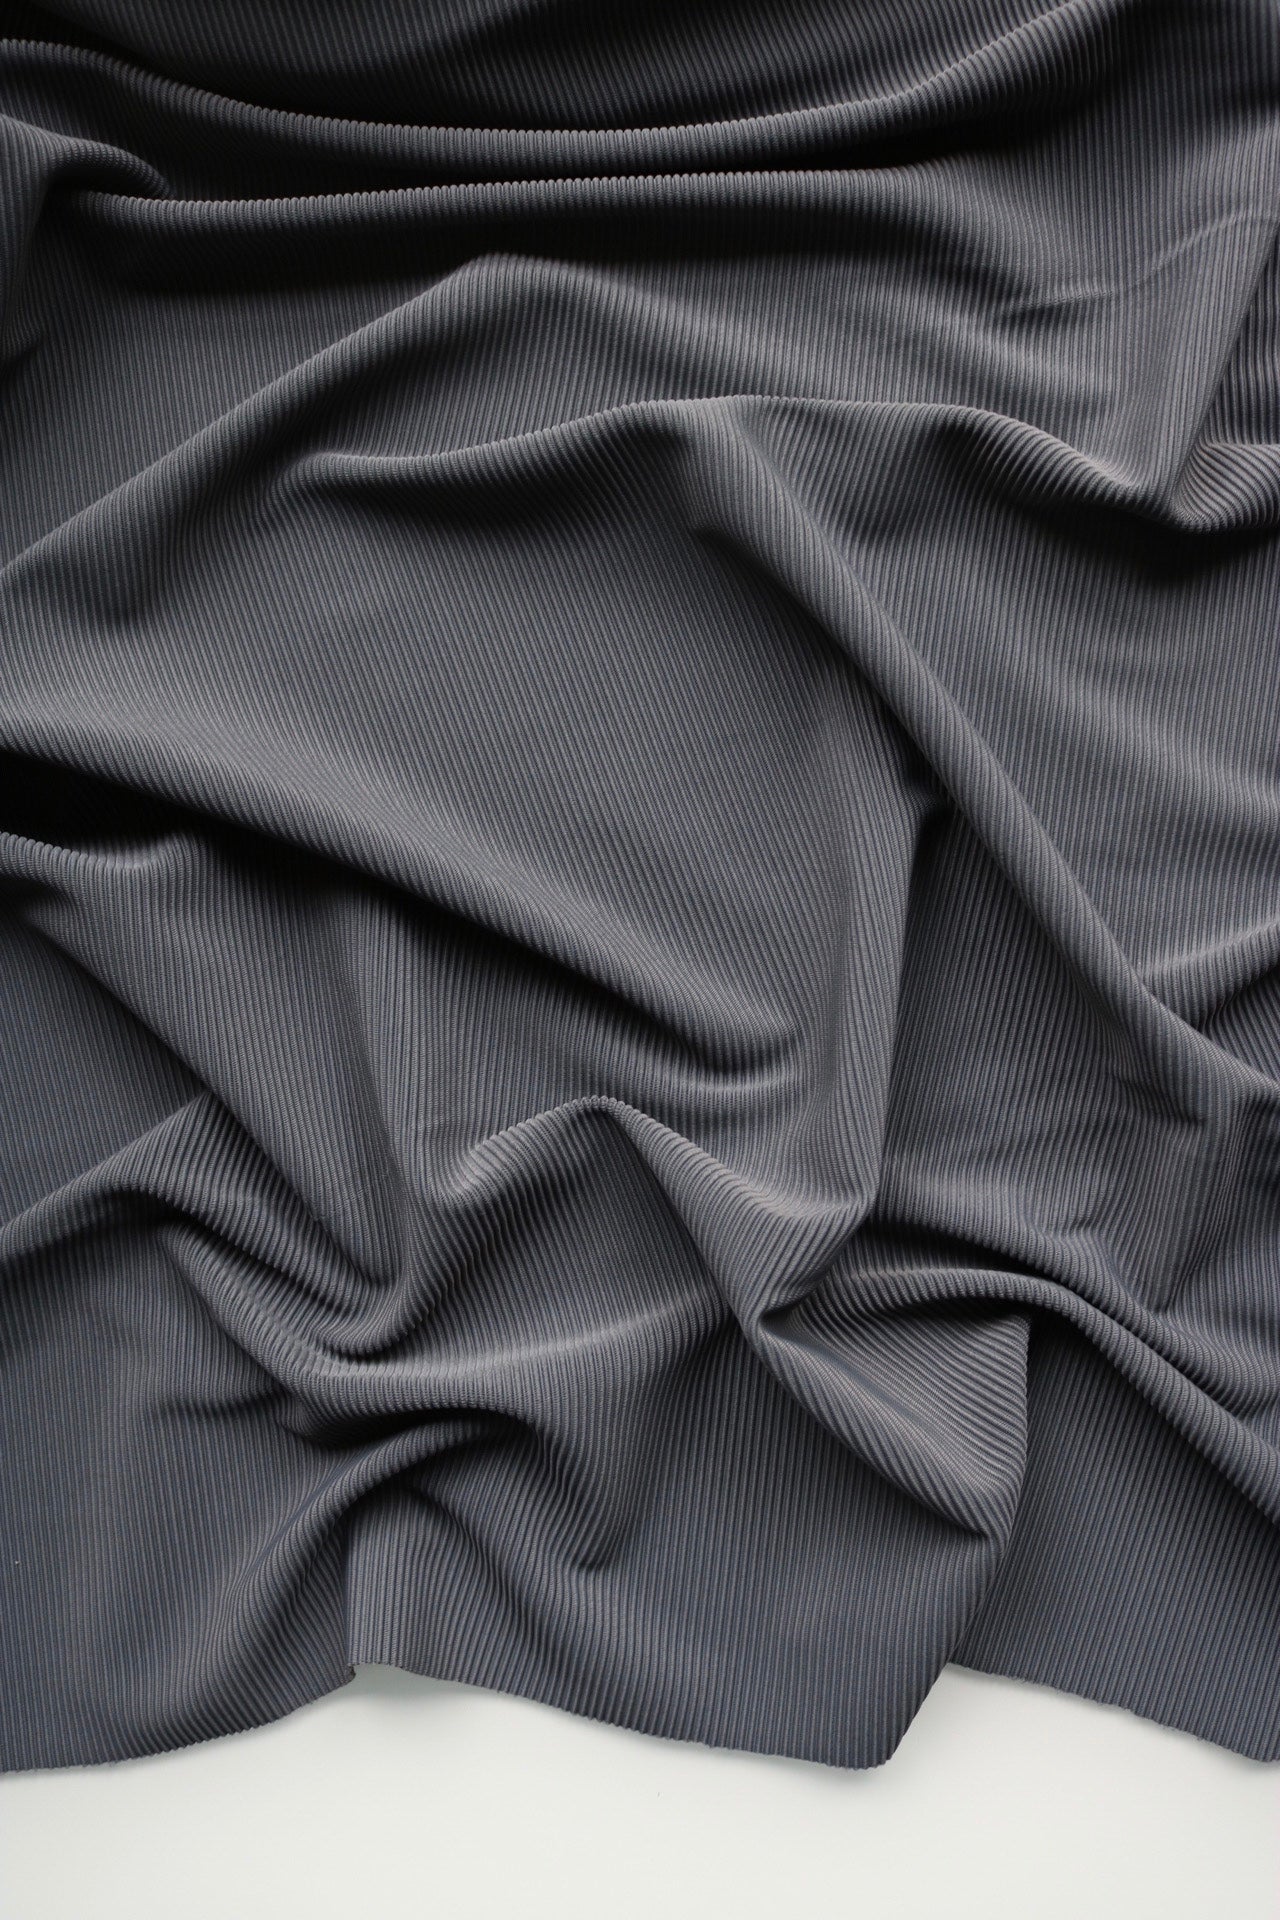 Nylon Spandex Tricot Stretch Fabric - Bra-Makers Supply